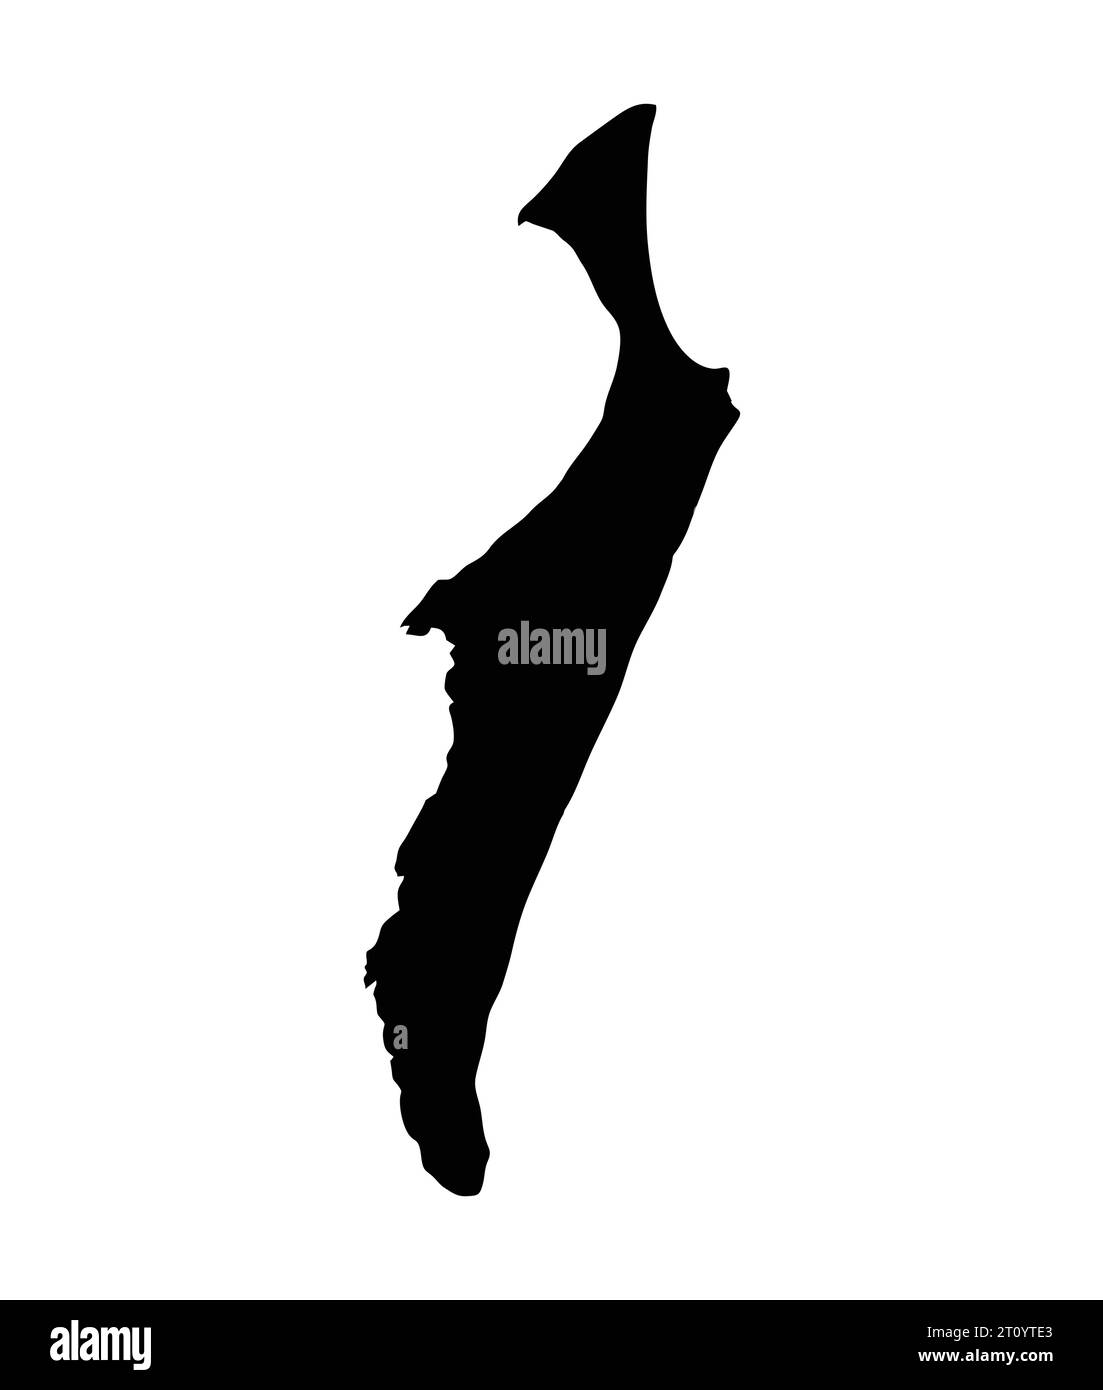 Fraser island island map silhouette region territory, black shape style illustration Stock Vector